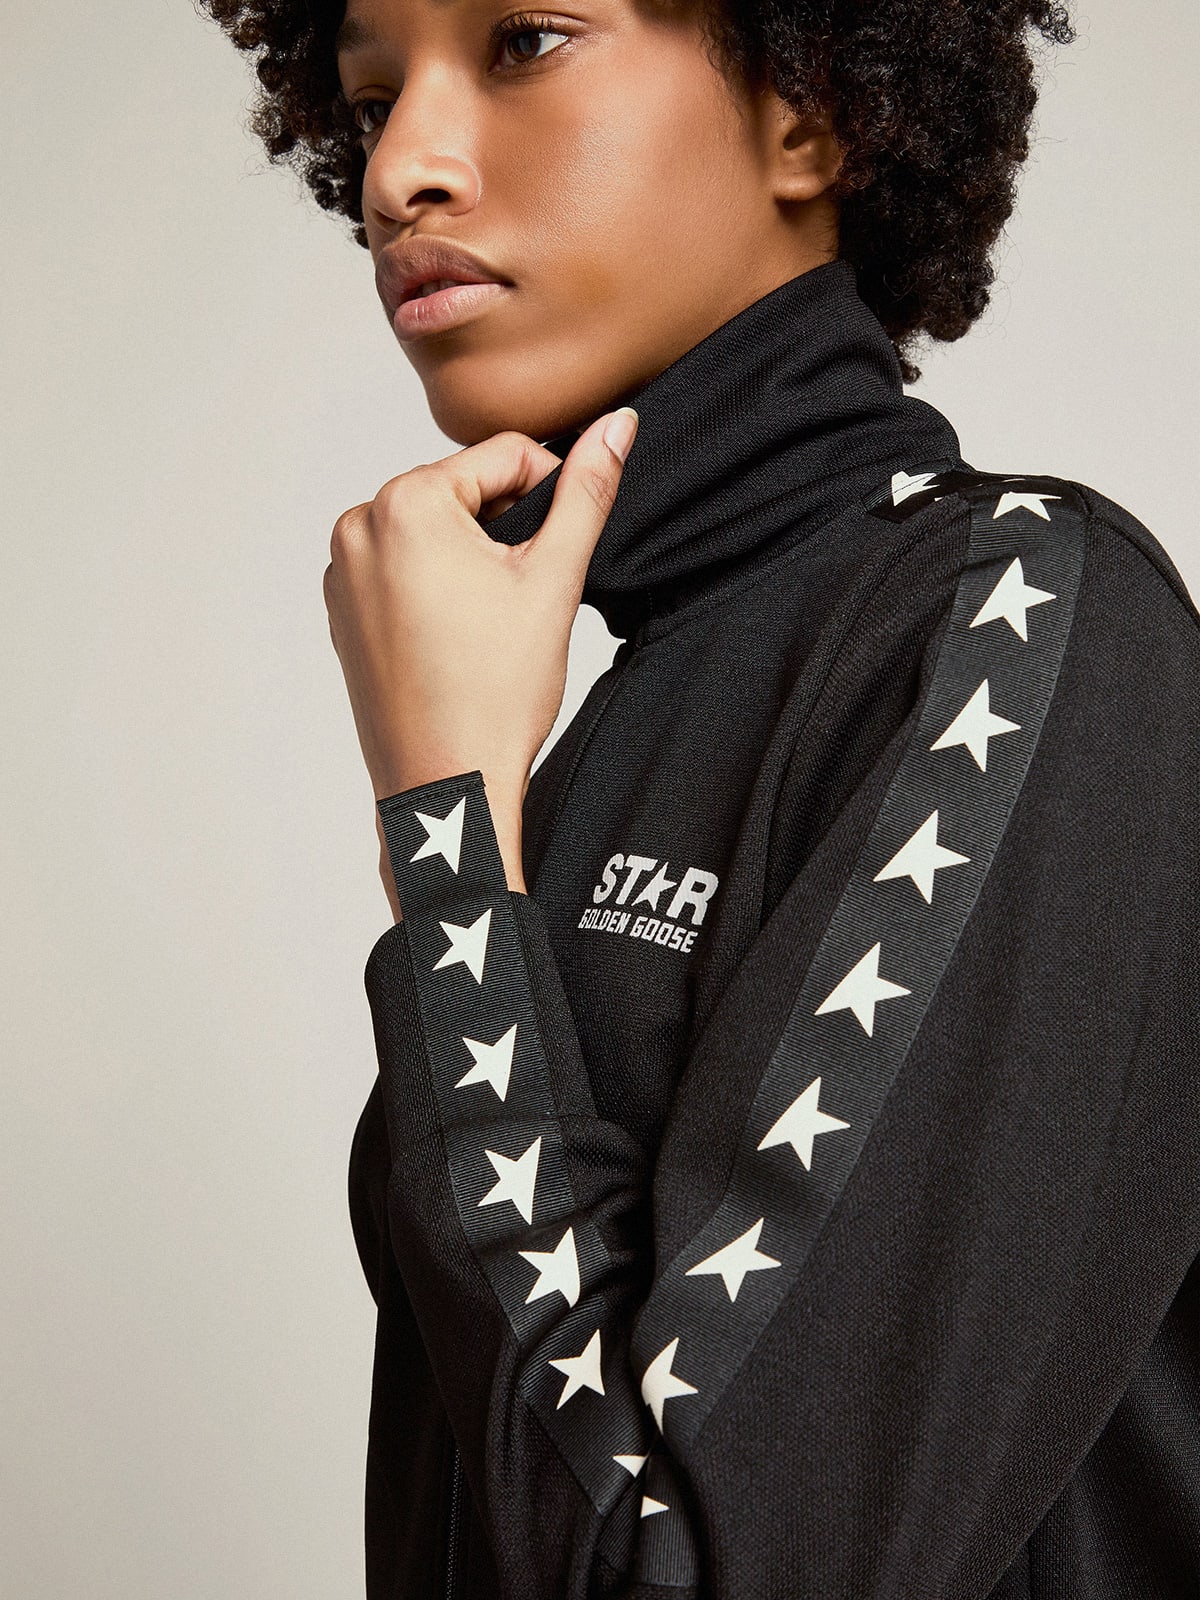 Golden Goose - Women’s black zipped sweatshirt with contrasting white stars in 